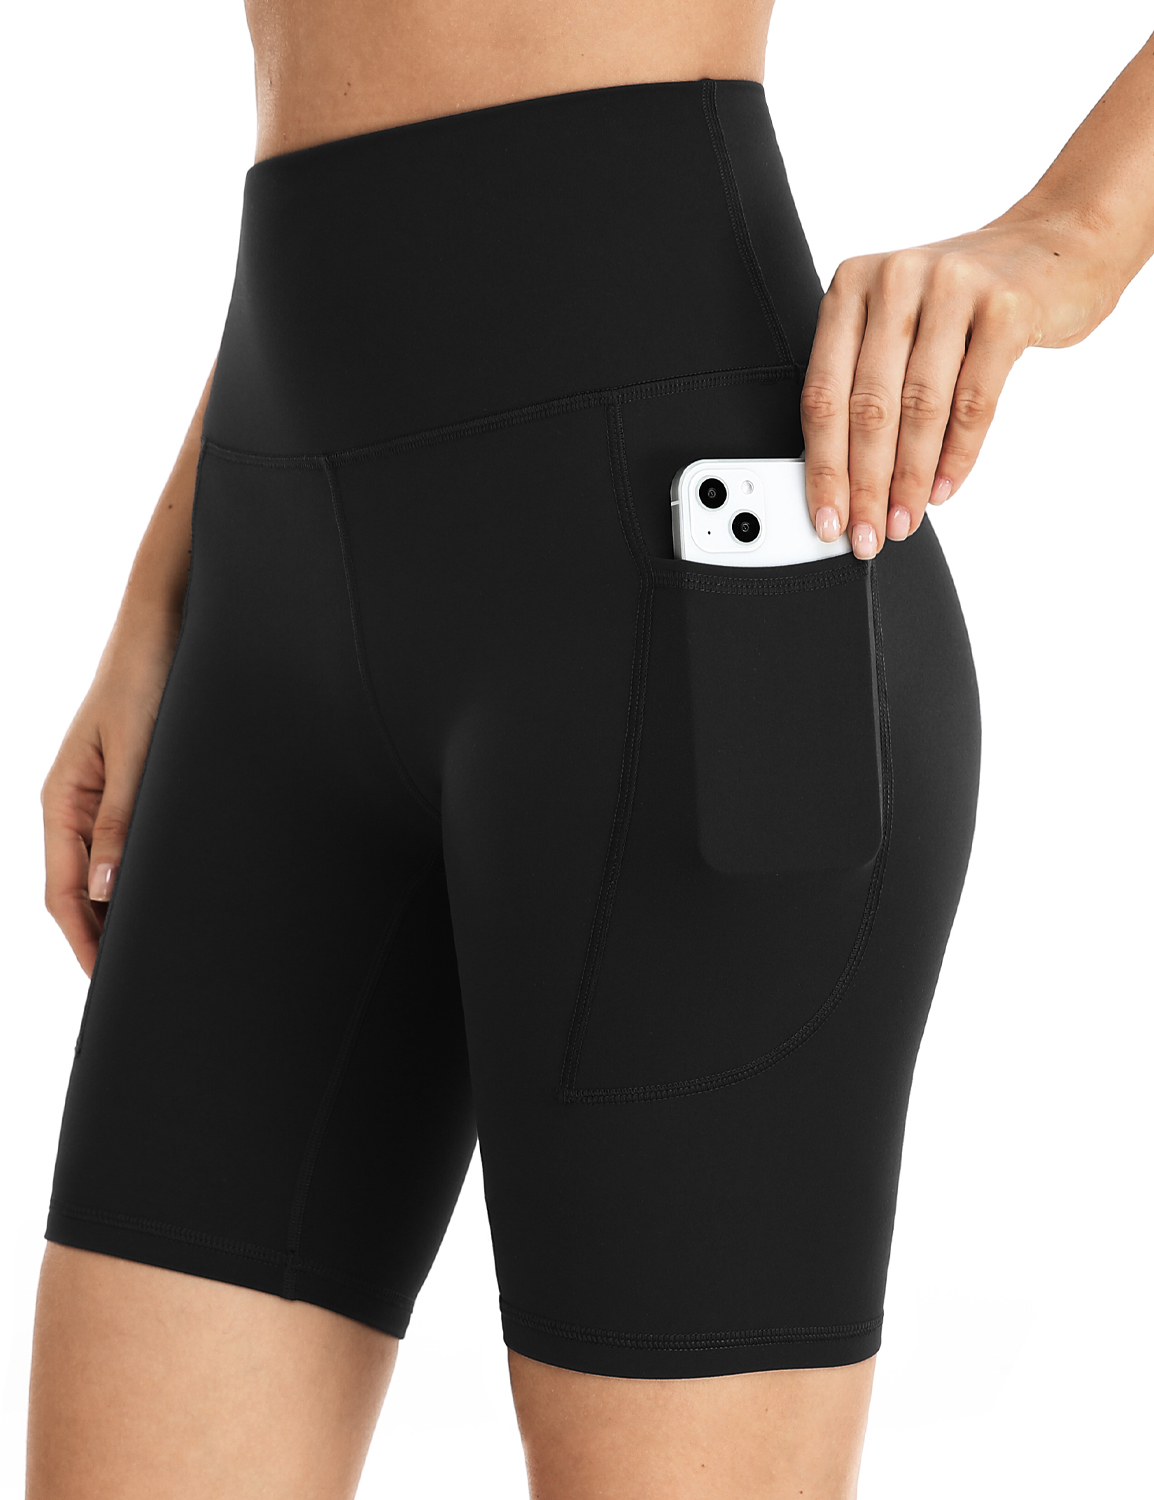  Shorts, Nwt Sunzel 8 Inseam Bike Shorts Pockets High Waisted Yoga  Workout Shorts Small